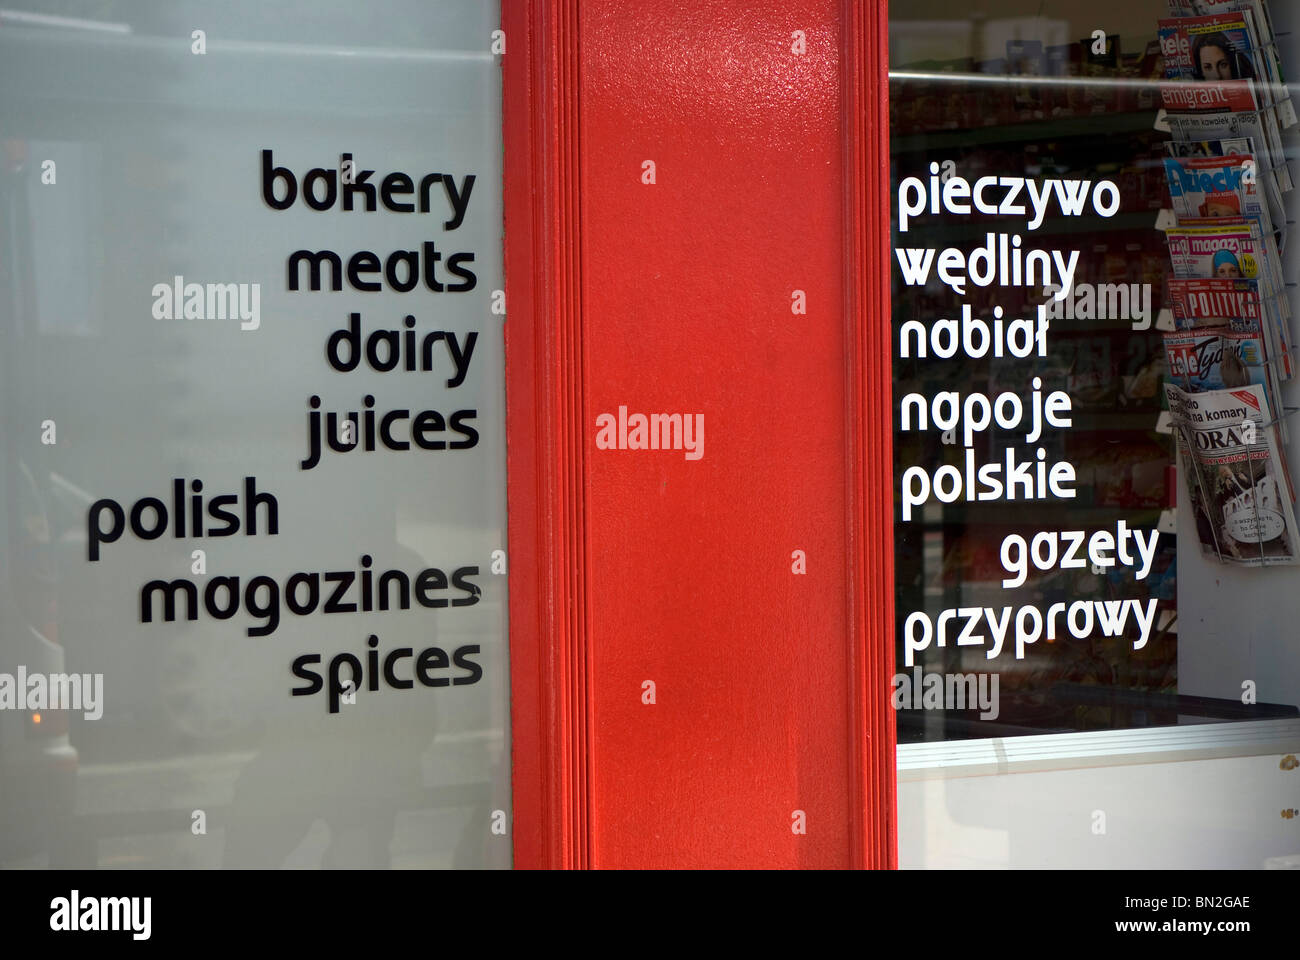 Windows of a Polish corner shop in Edinburgh, Scotland, advertising its products in English and Polish. Stock Photo